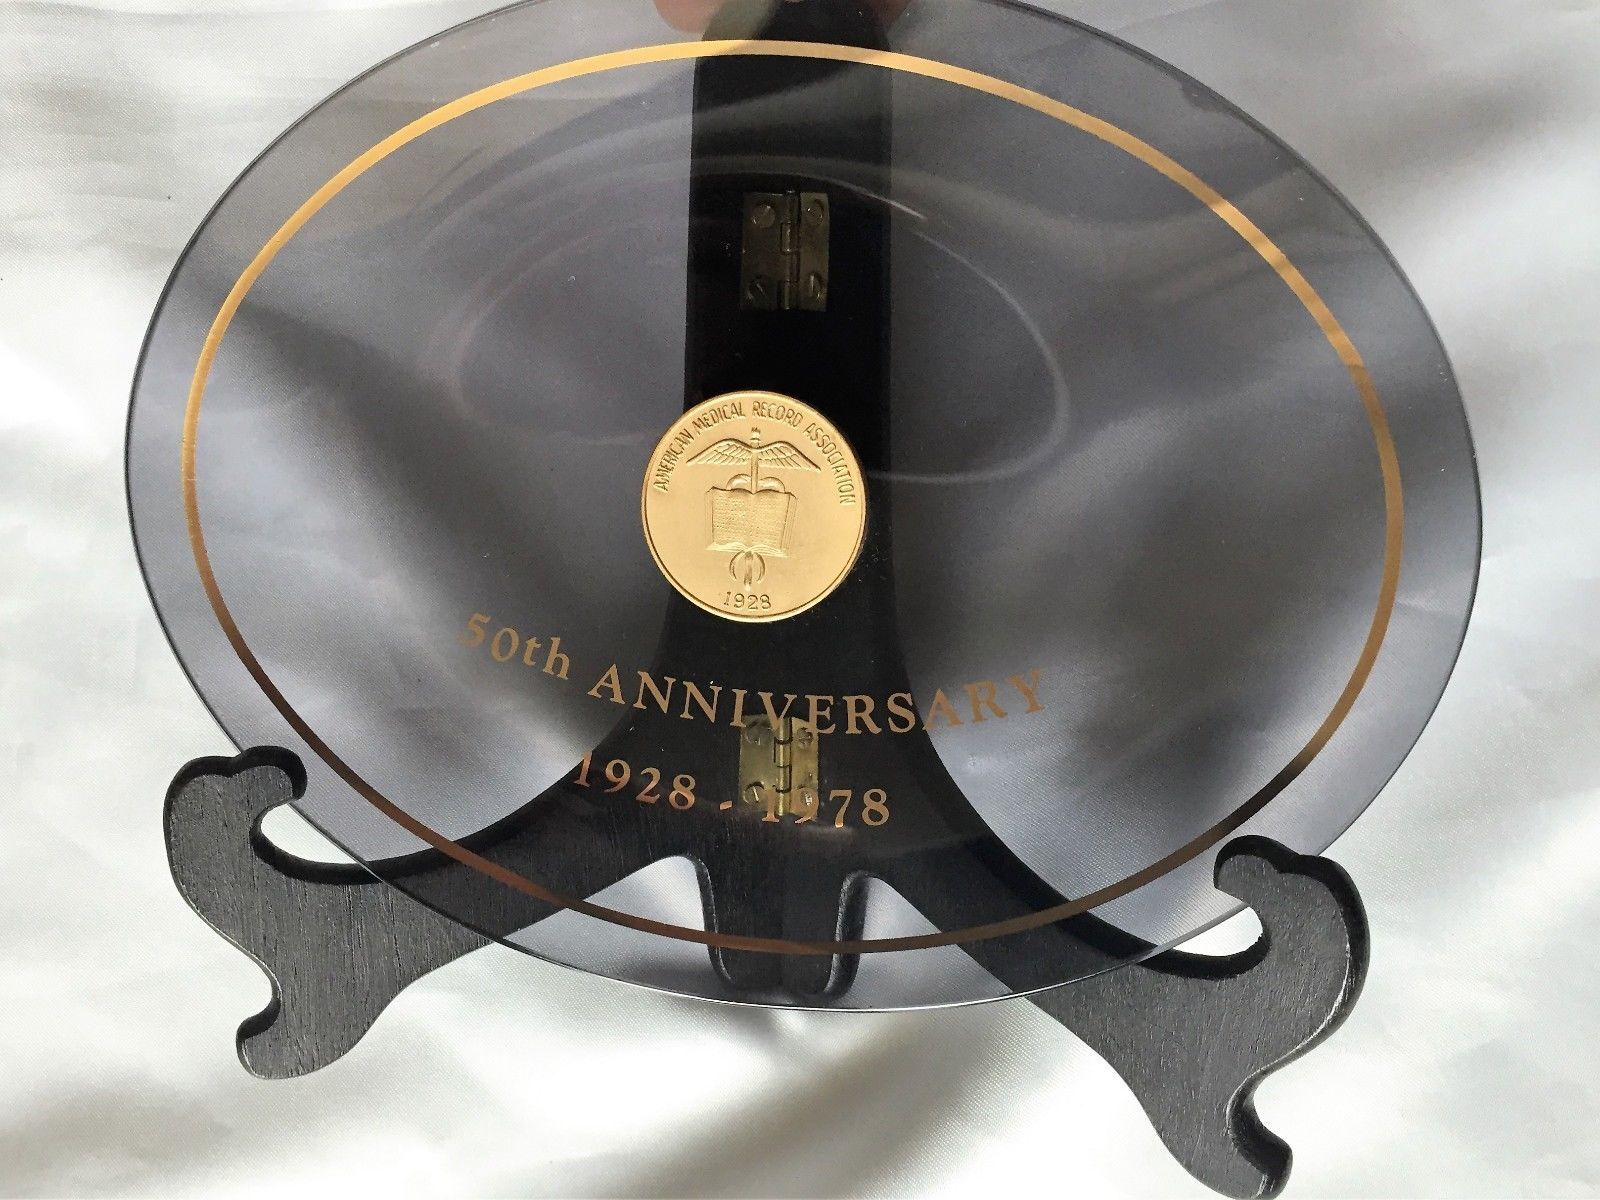 Vintage AMRA American Medical Record Association Award 50th Anniversary Plaque